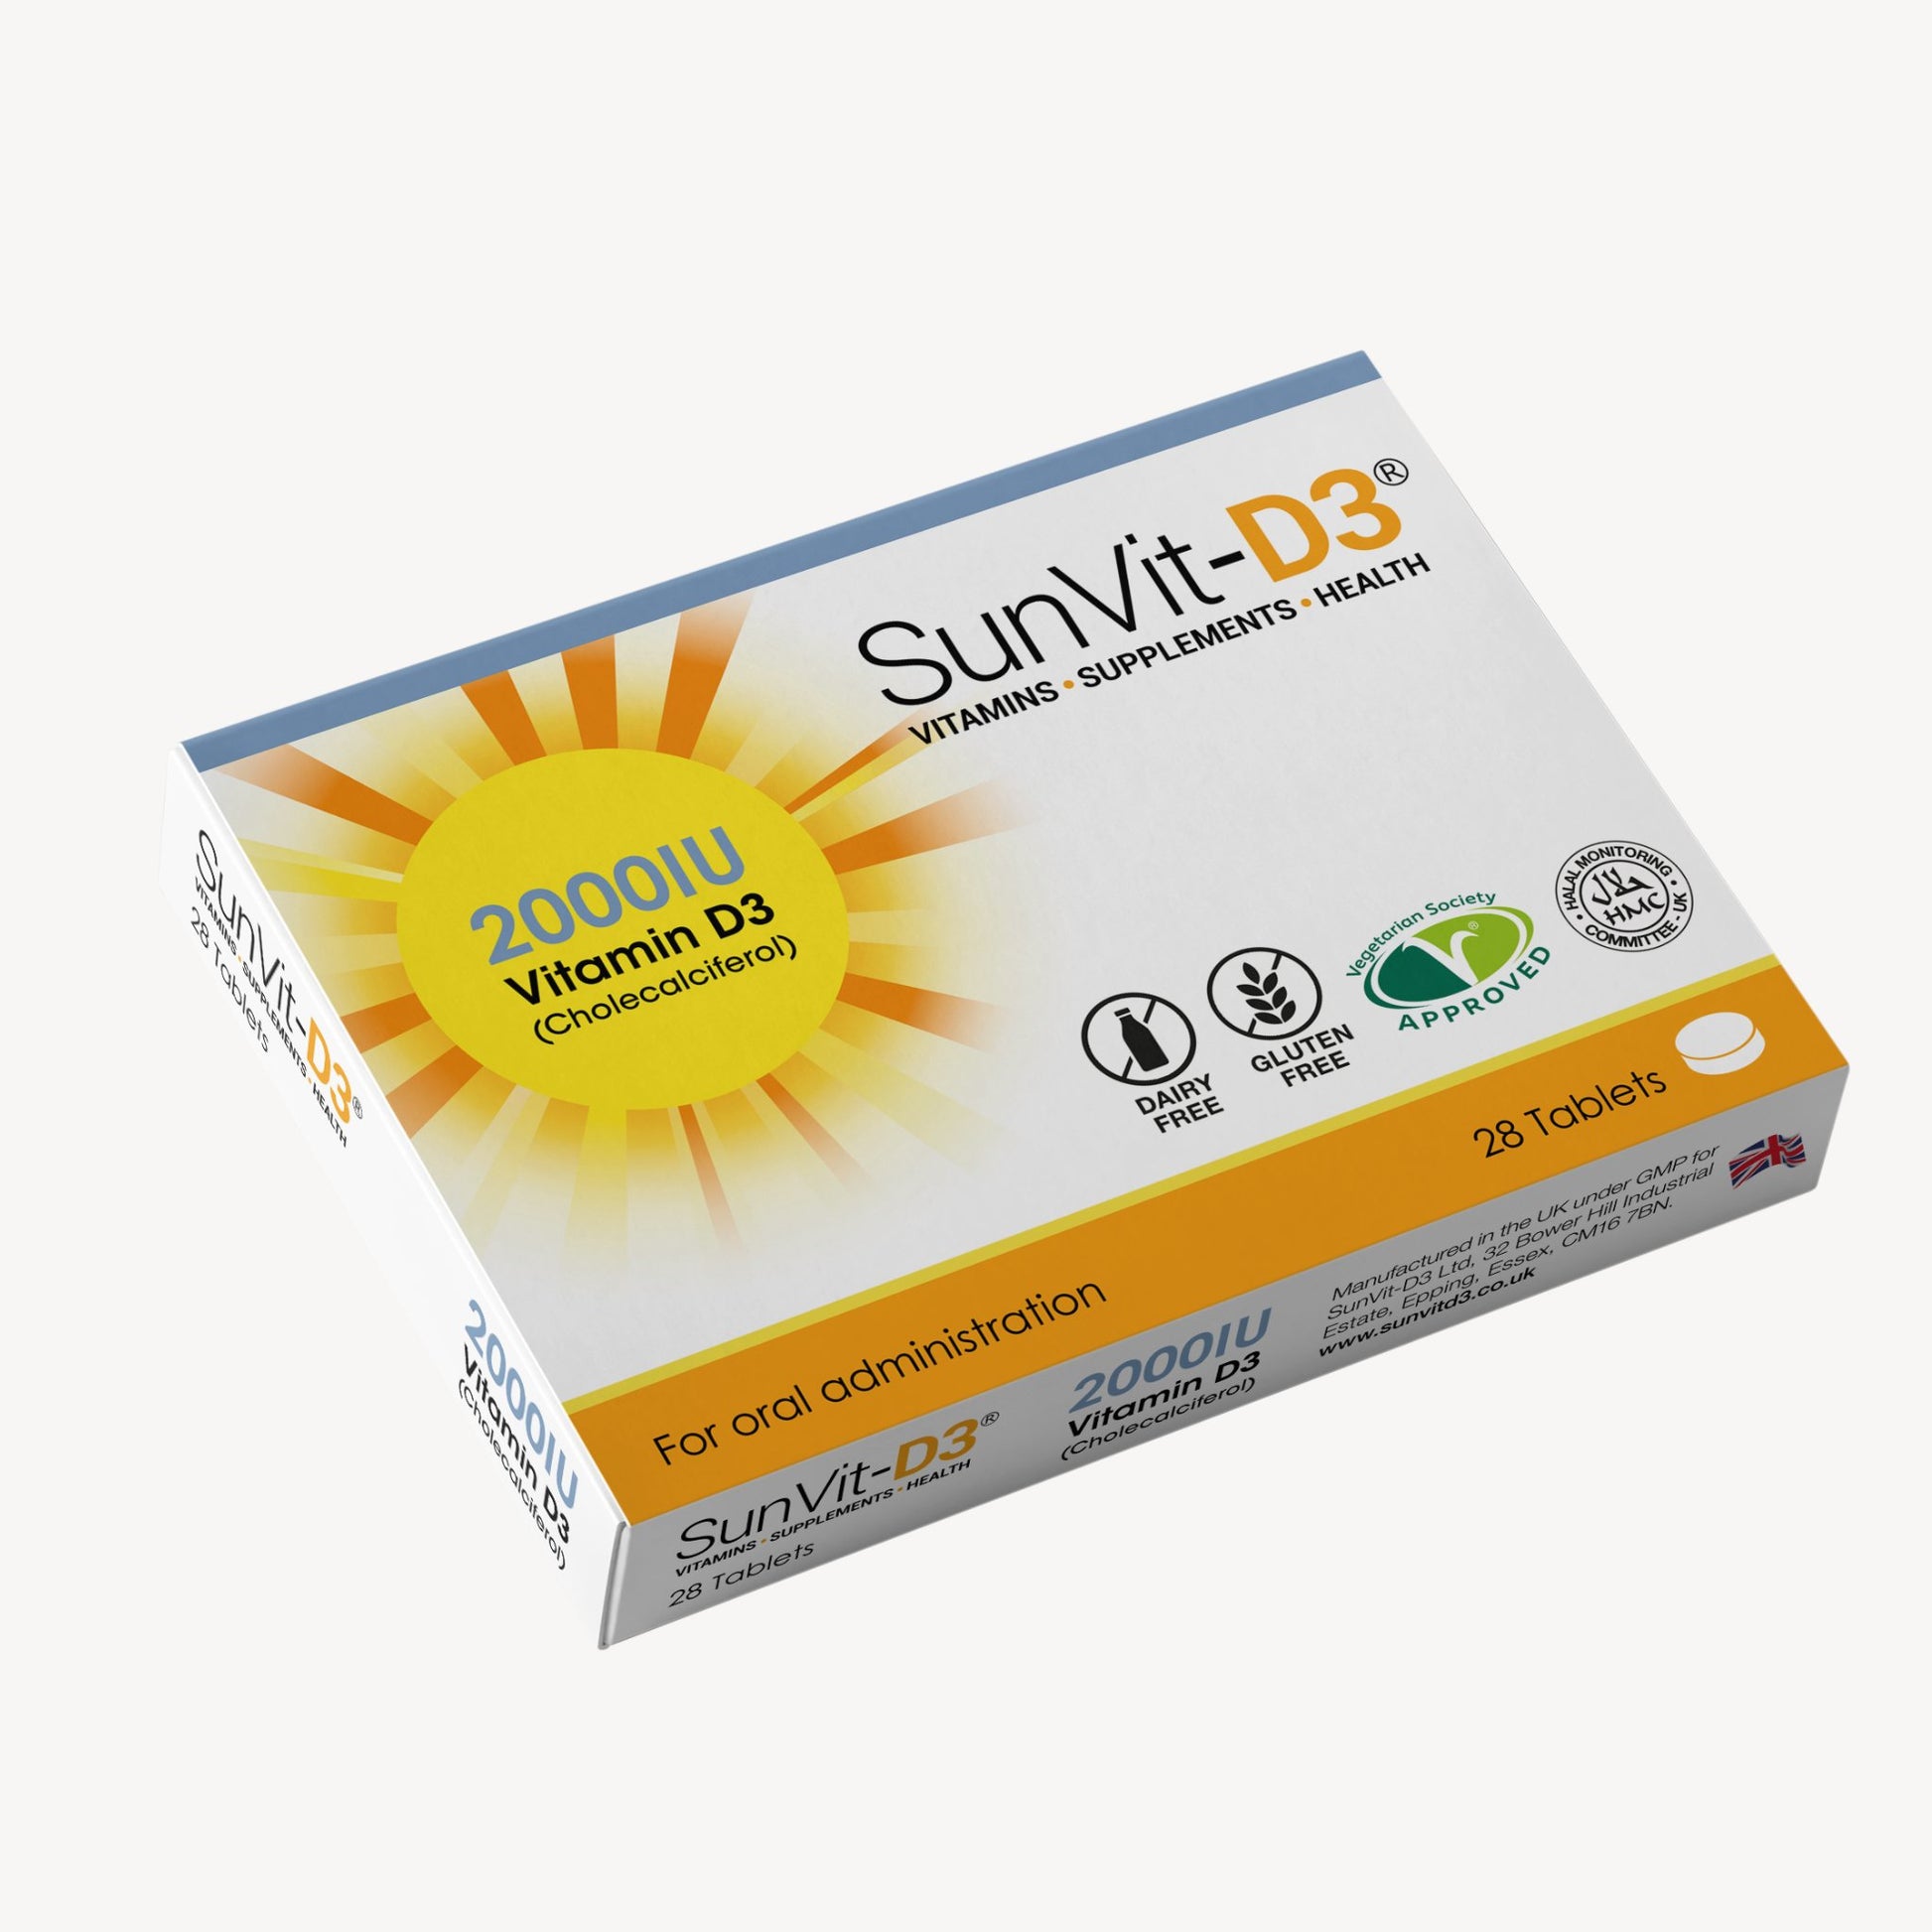 Vitamin D3 2,000IU (50ug) 28 Convenient Daily Strength Tablets - SunVit-D3